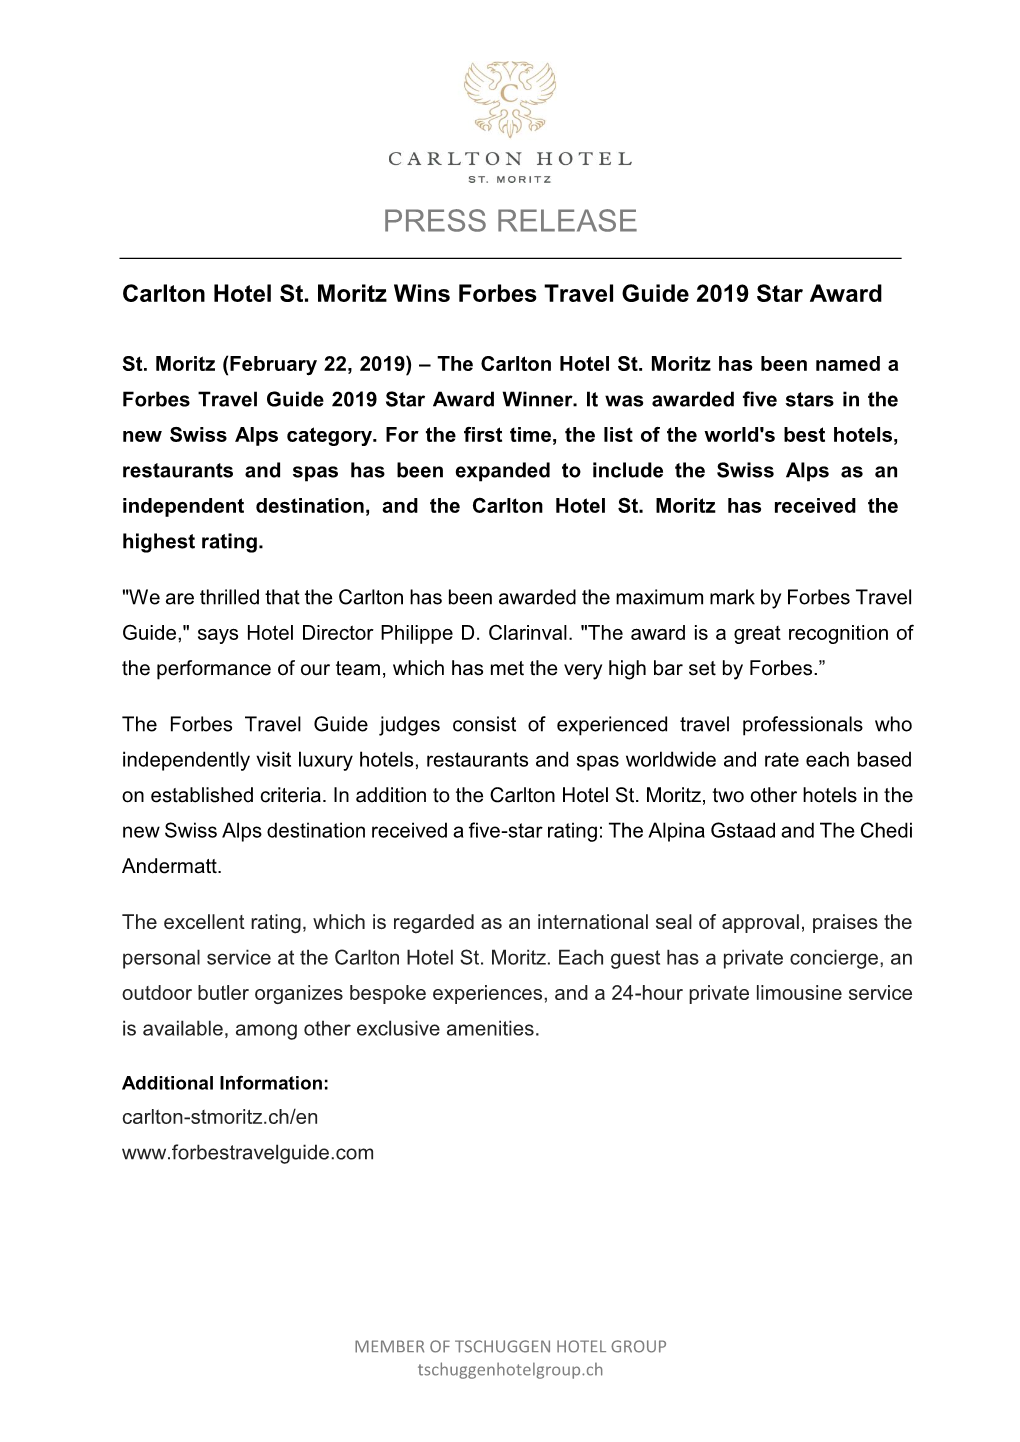 Carlton Hotel St. Moritz Wins Forbes Travel Guide 2019 Star Award